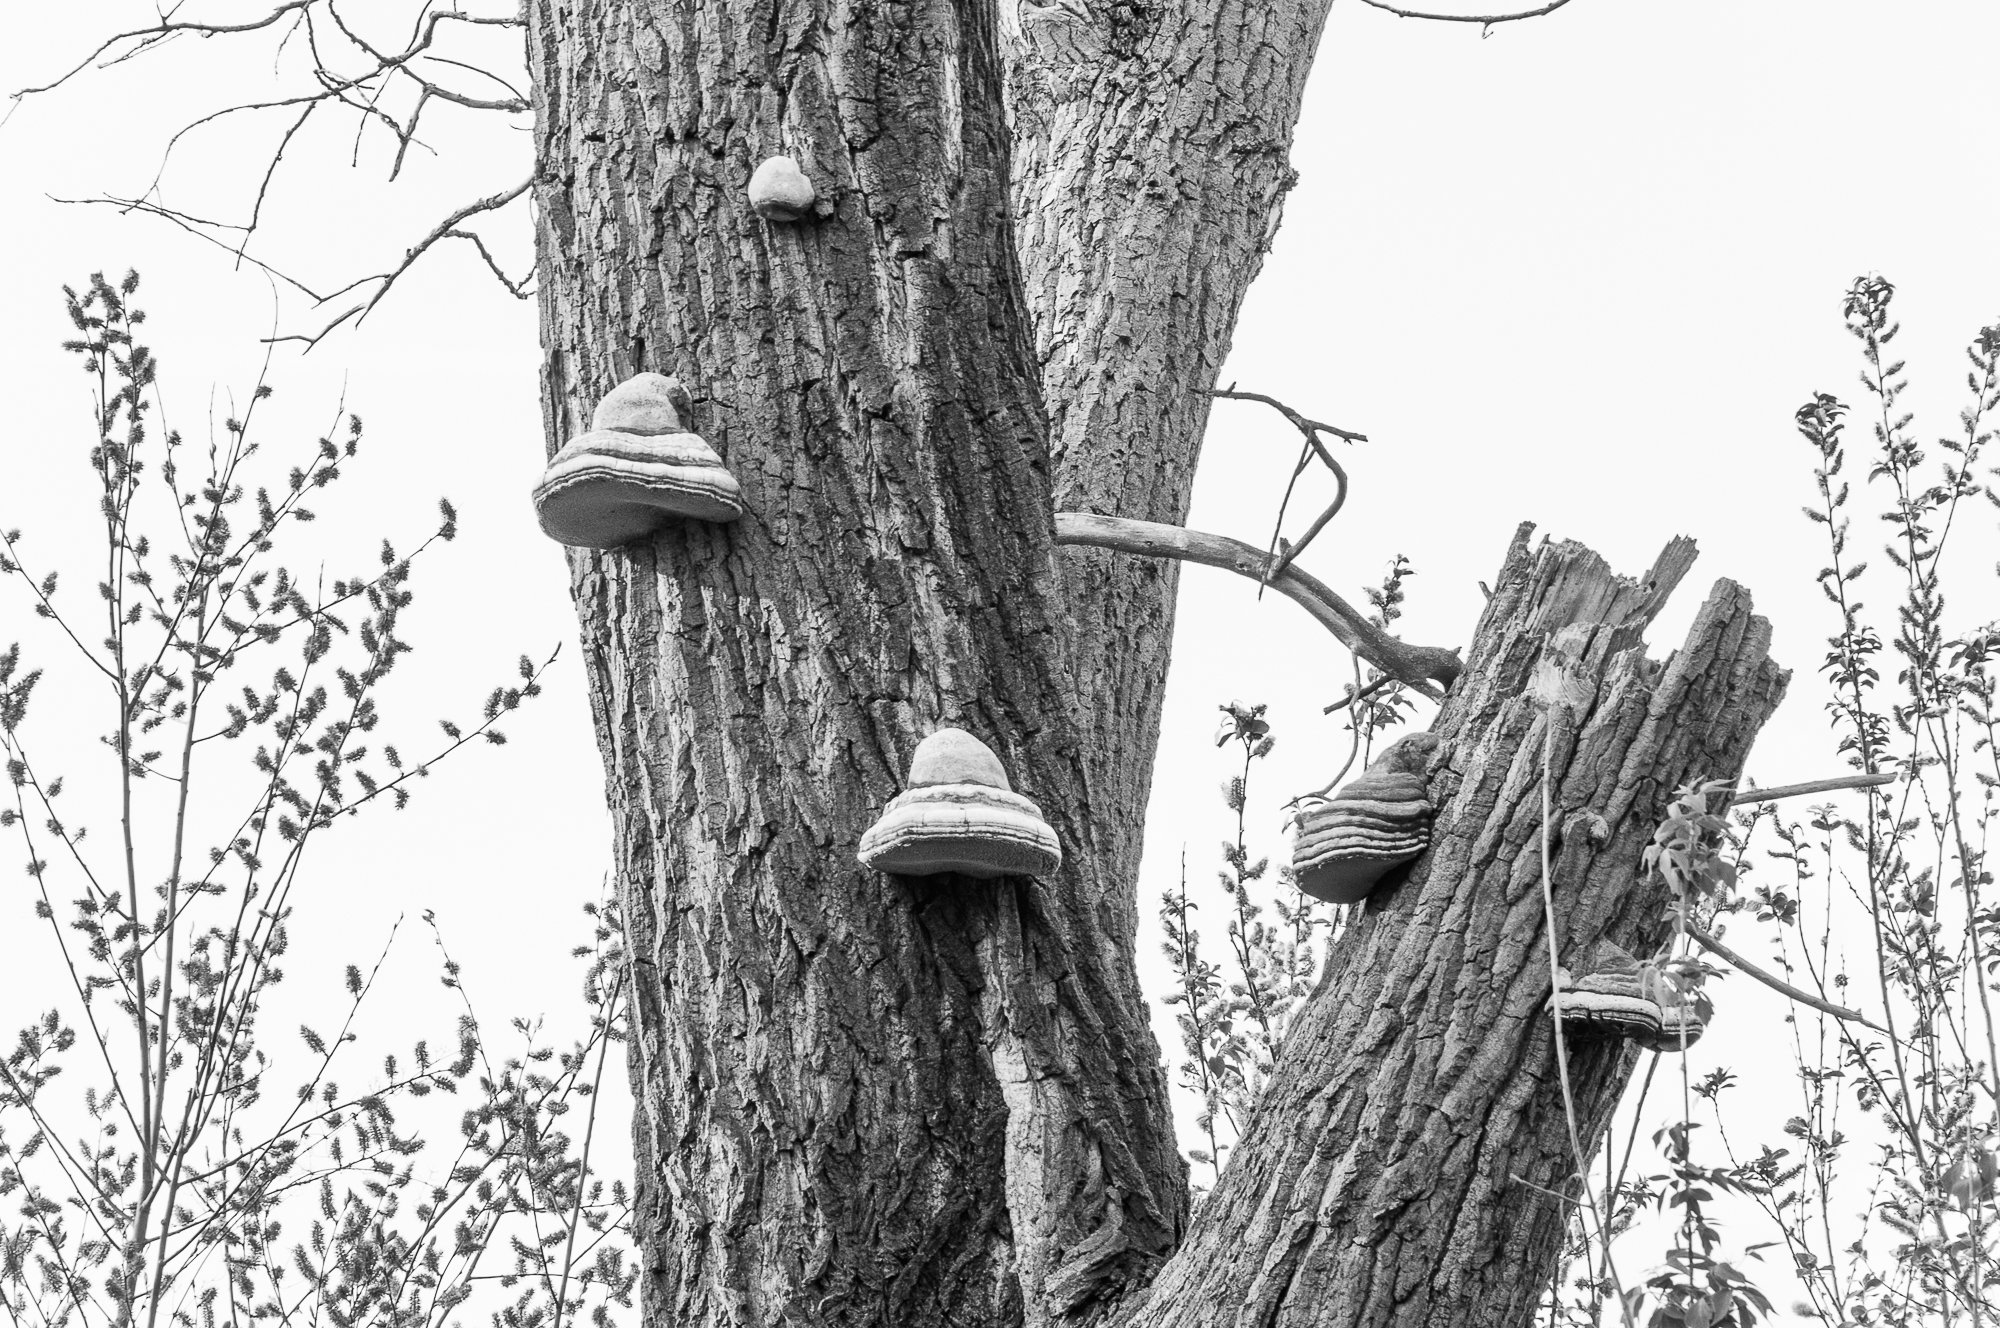 Adam Mazek Photography Warsaw 2020. Post: "Mushroom picking." Minimalism. Tree and bracket fungus.